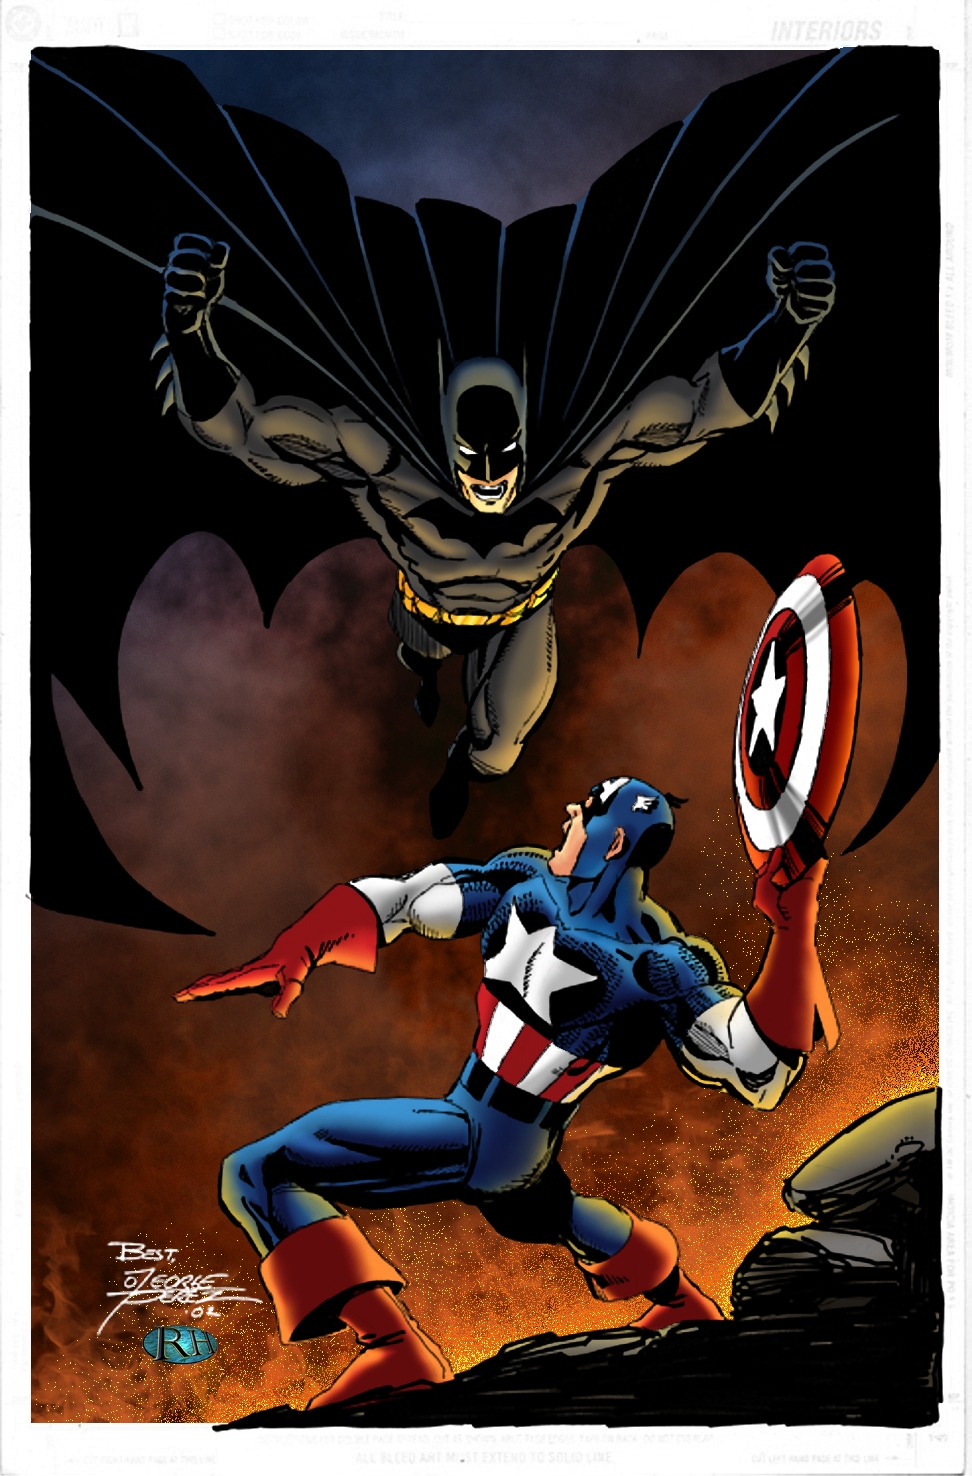 Batman vs Captain America by RossHughes on DeviantArt